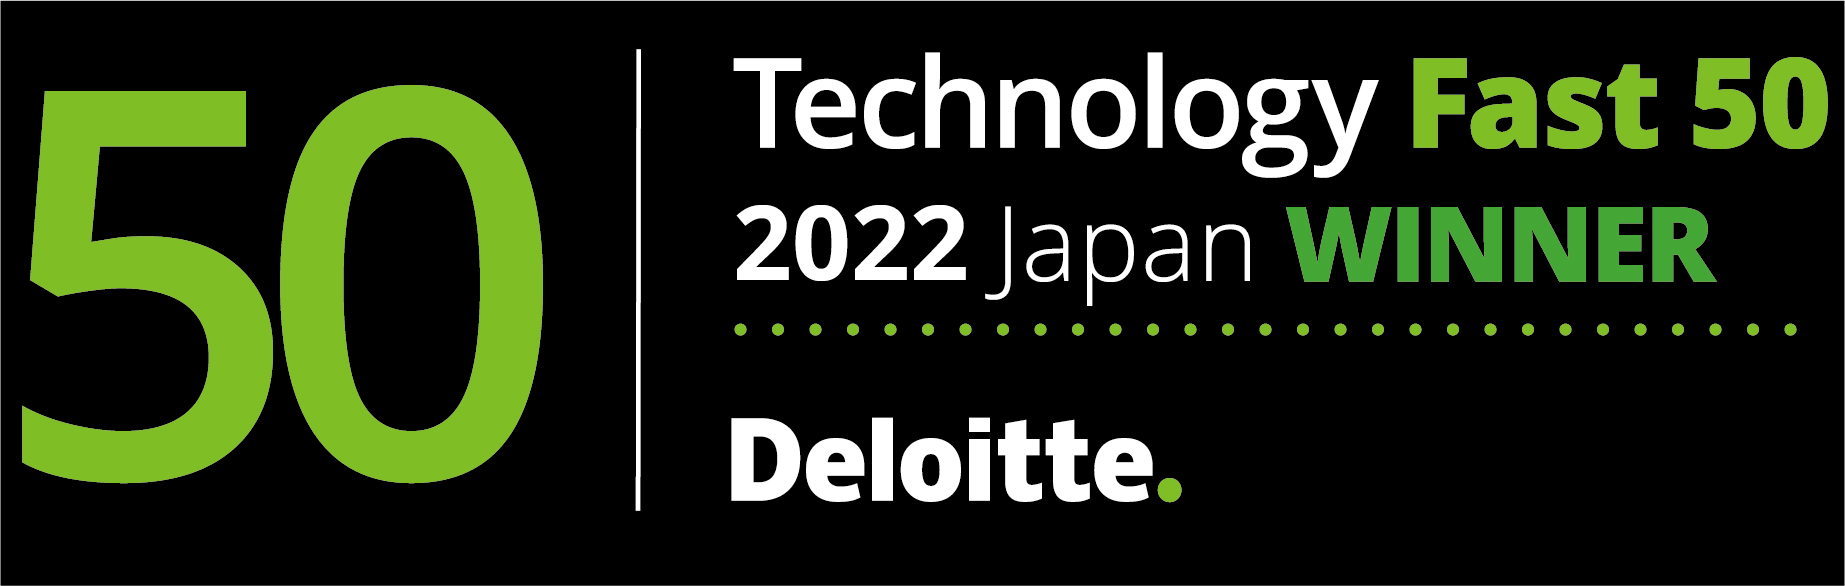 Technology Fast 50 2022 Japan